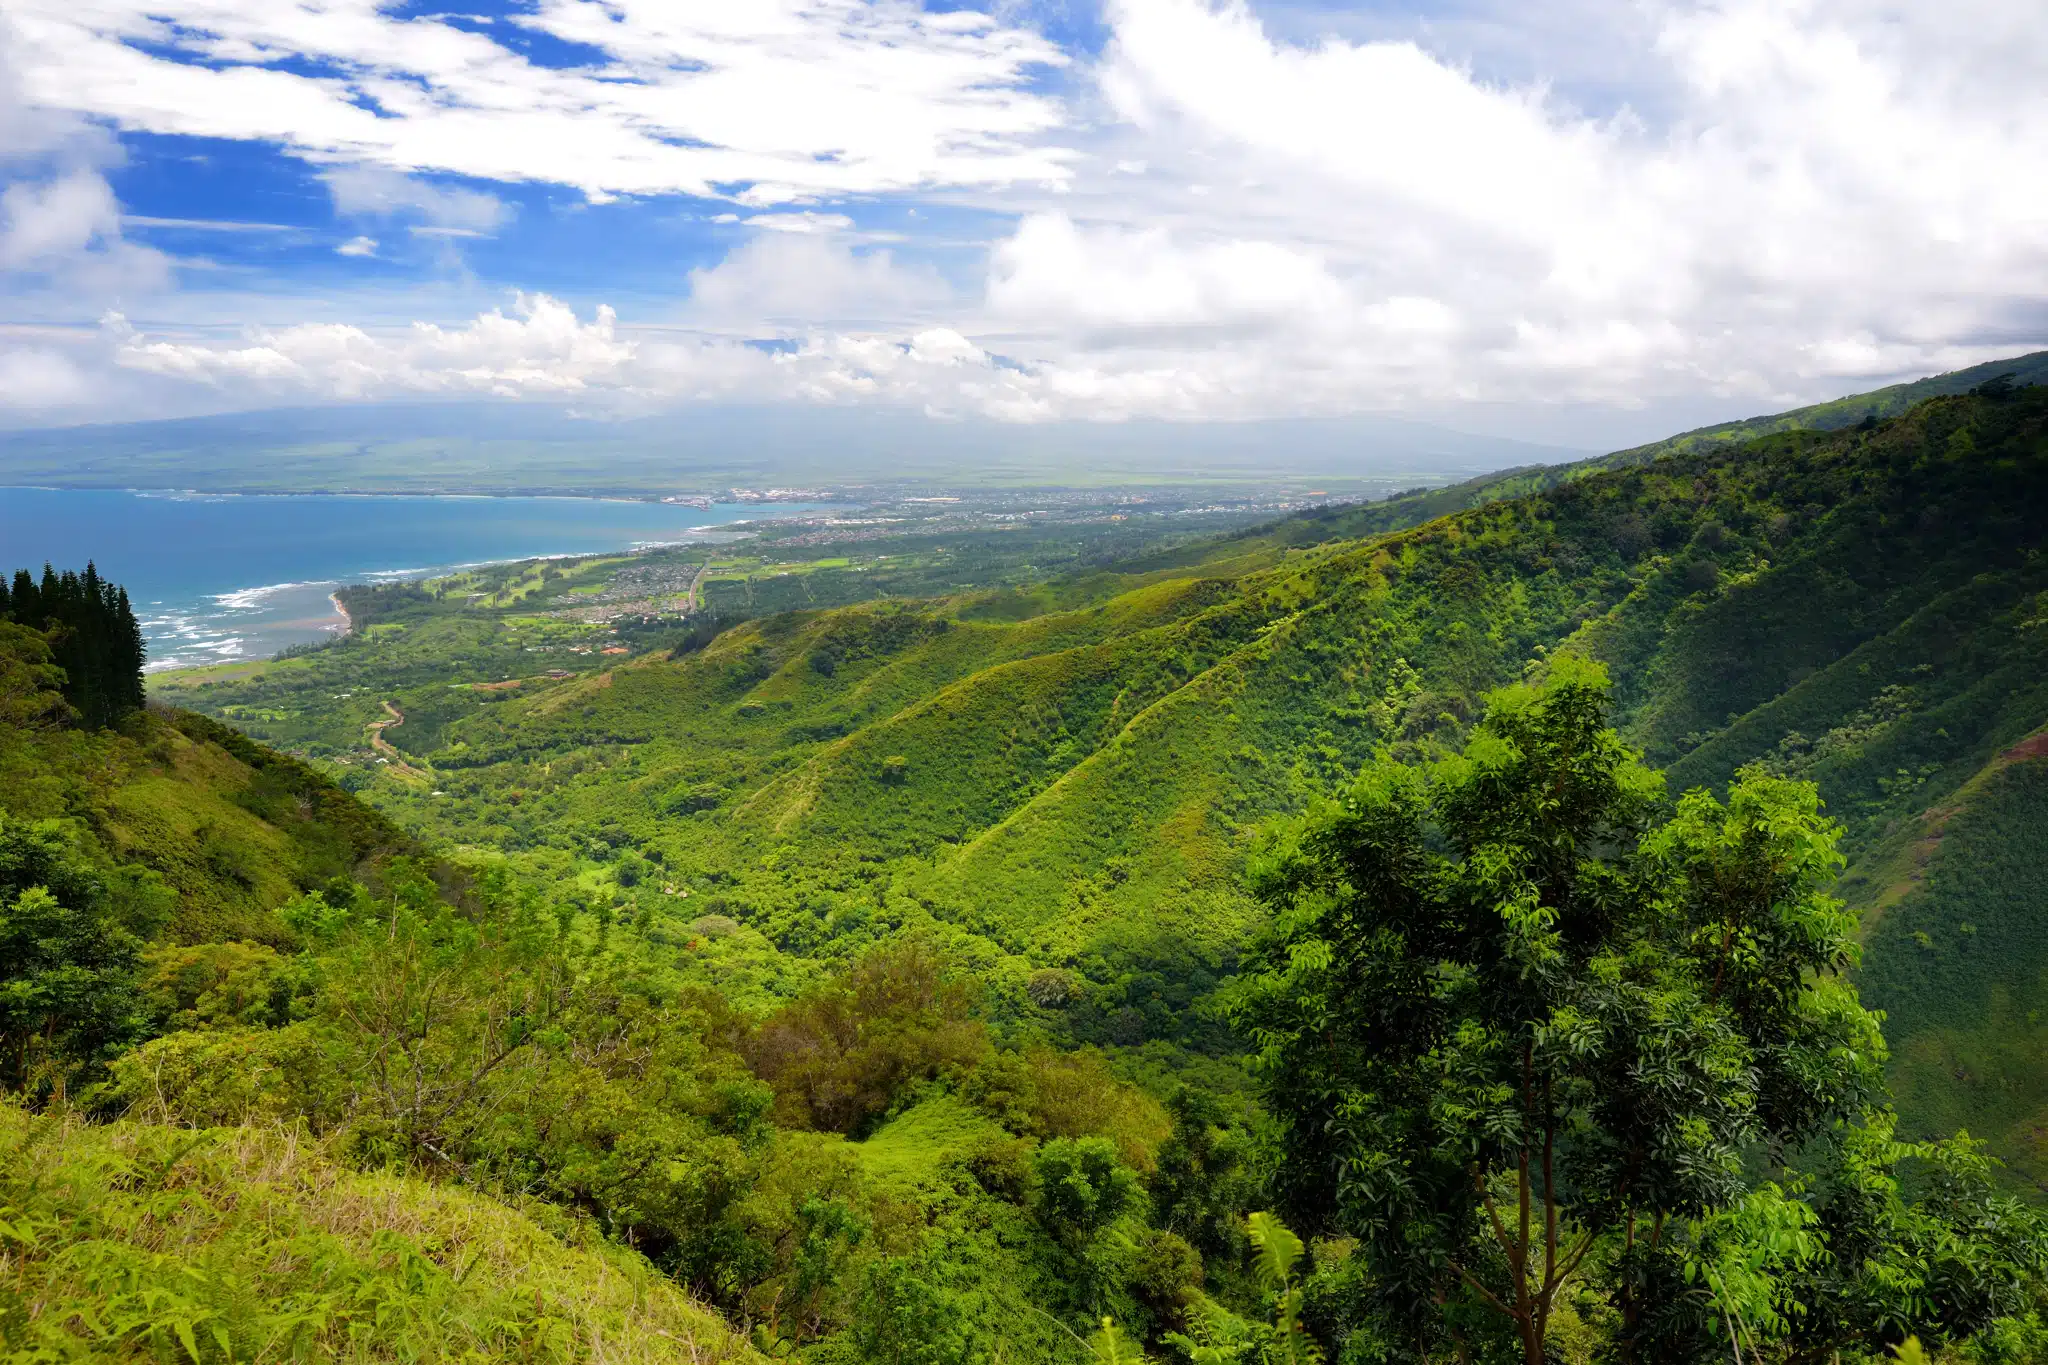 Waihee Ridge Trail is a Hiking Trail located in the city of Wailuku on Maui, Hawaii